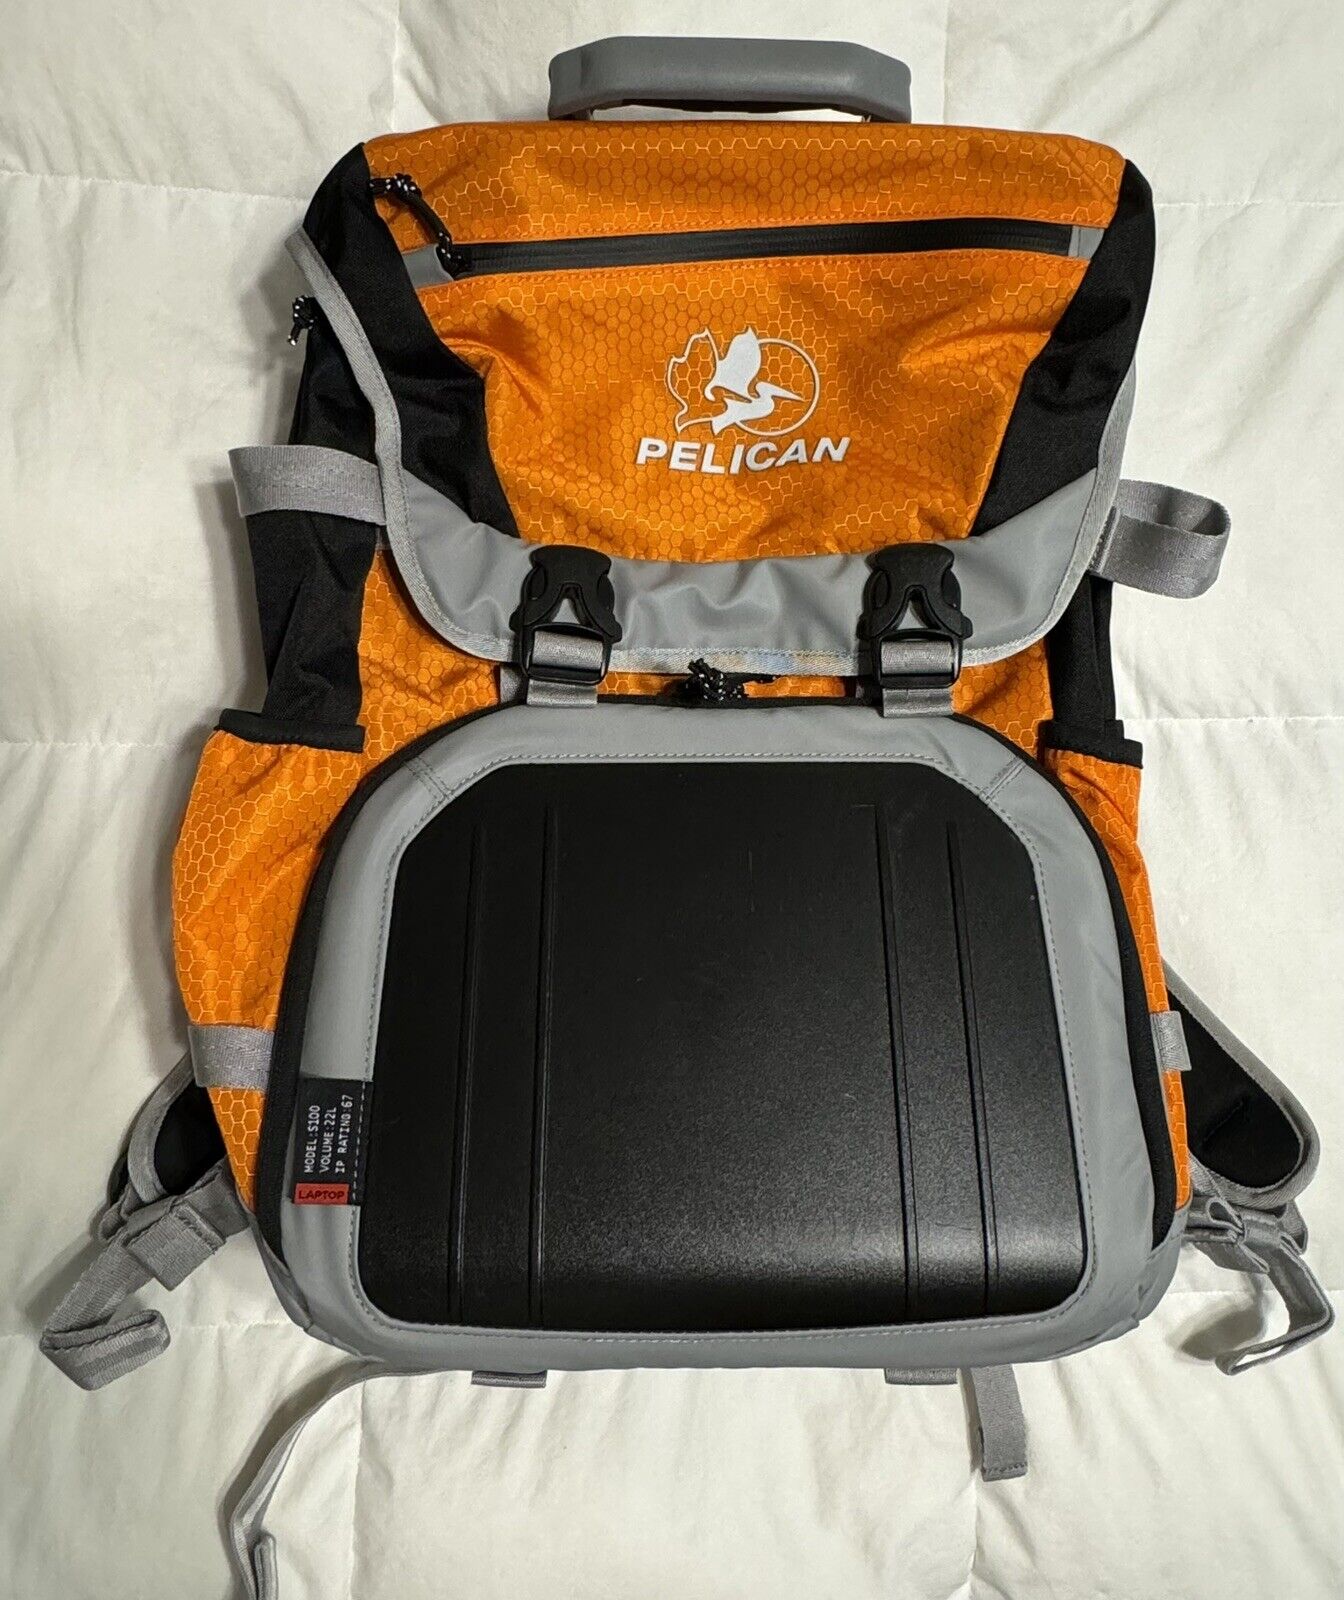 Pelican S100 Sport Elite Laptop Back Pack With Built In Hard Case